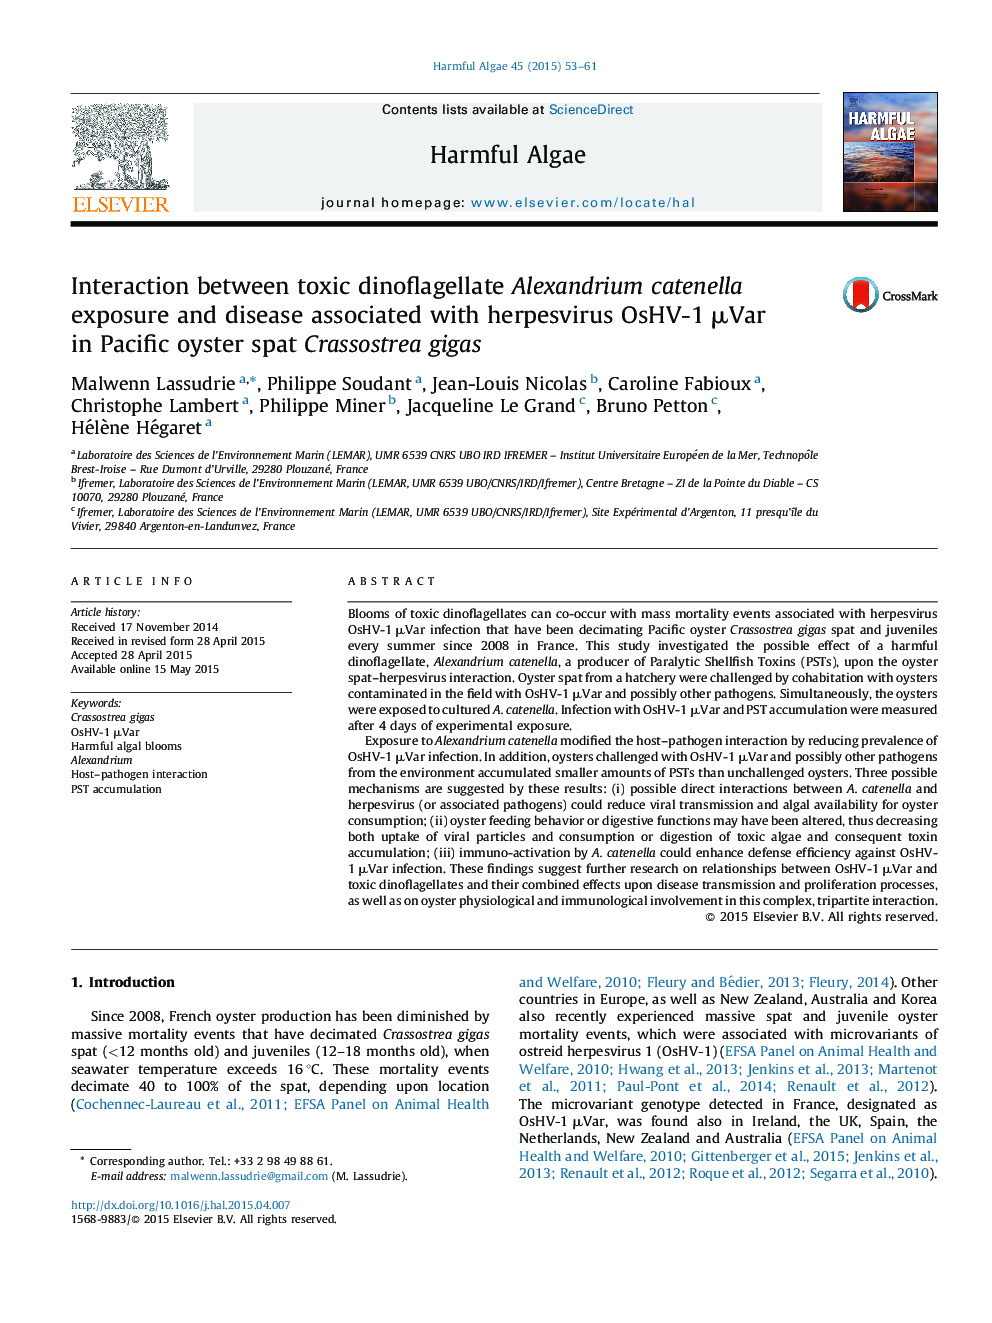 Interaction between toxic dinoflagellate Alexandrium catenella exposure and disease associated with herpesvirus OsHV-1 μVar in Pacific oyster spat Crassostrea gigas